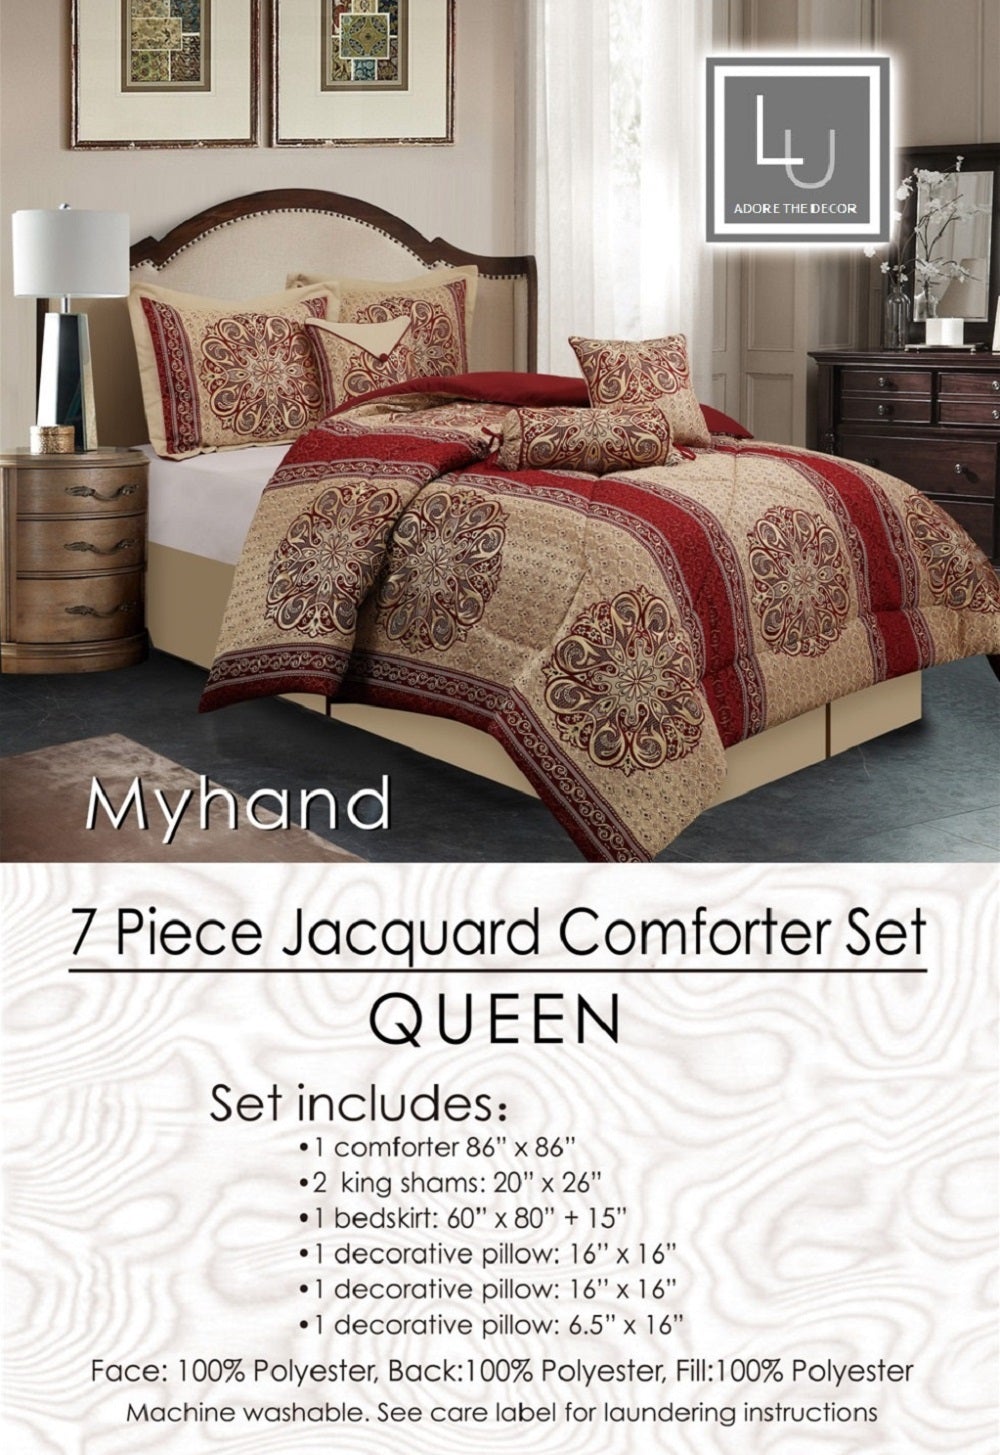 Linen Universe 7 Piece Jacquard Comforter Set, Gold, Burgundy, Red - Linen Universe Co.